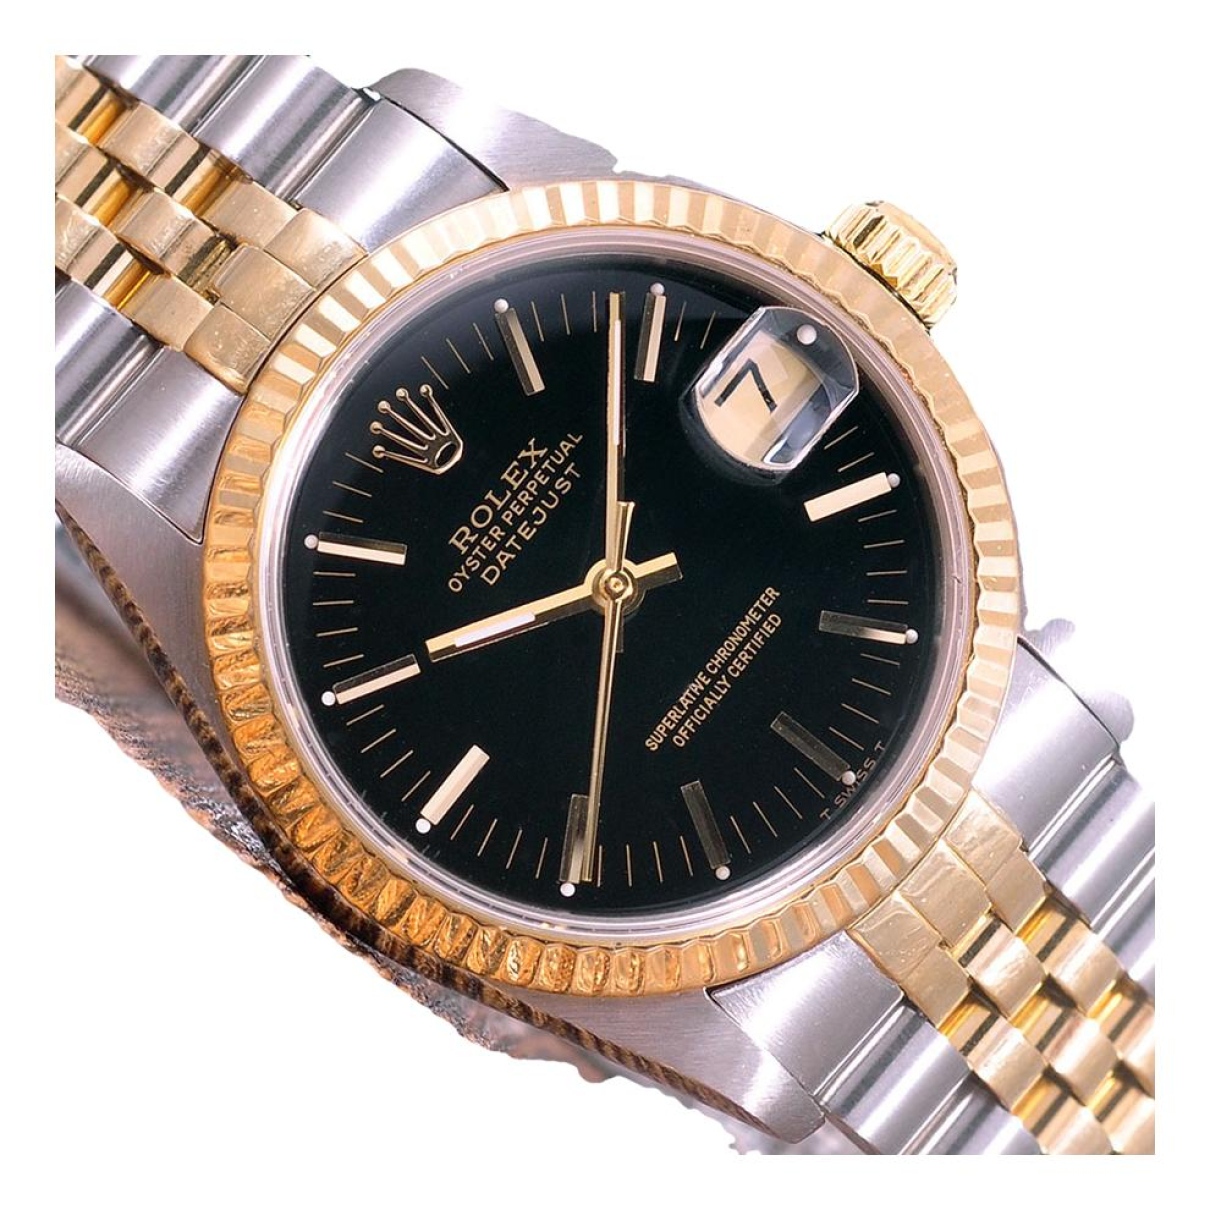 image of Rolex Datejust 31mm watch